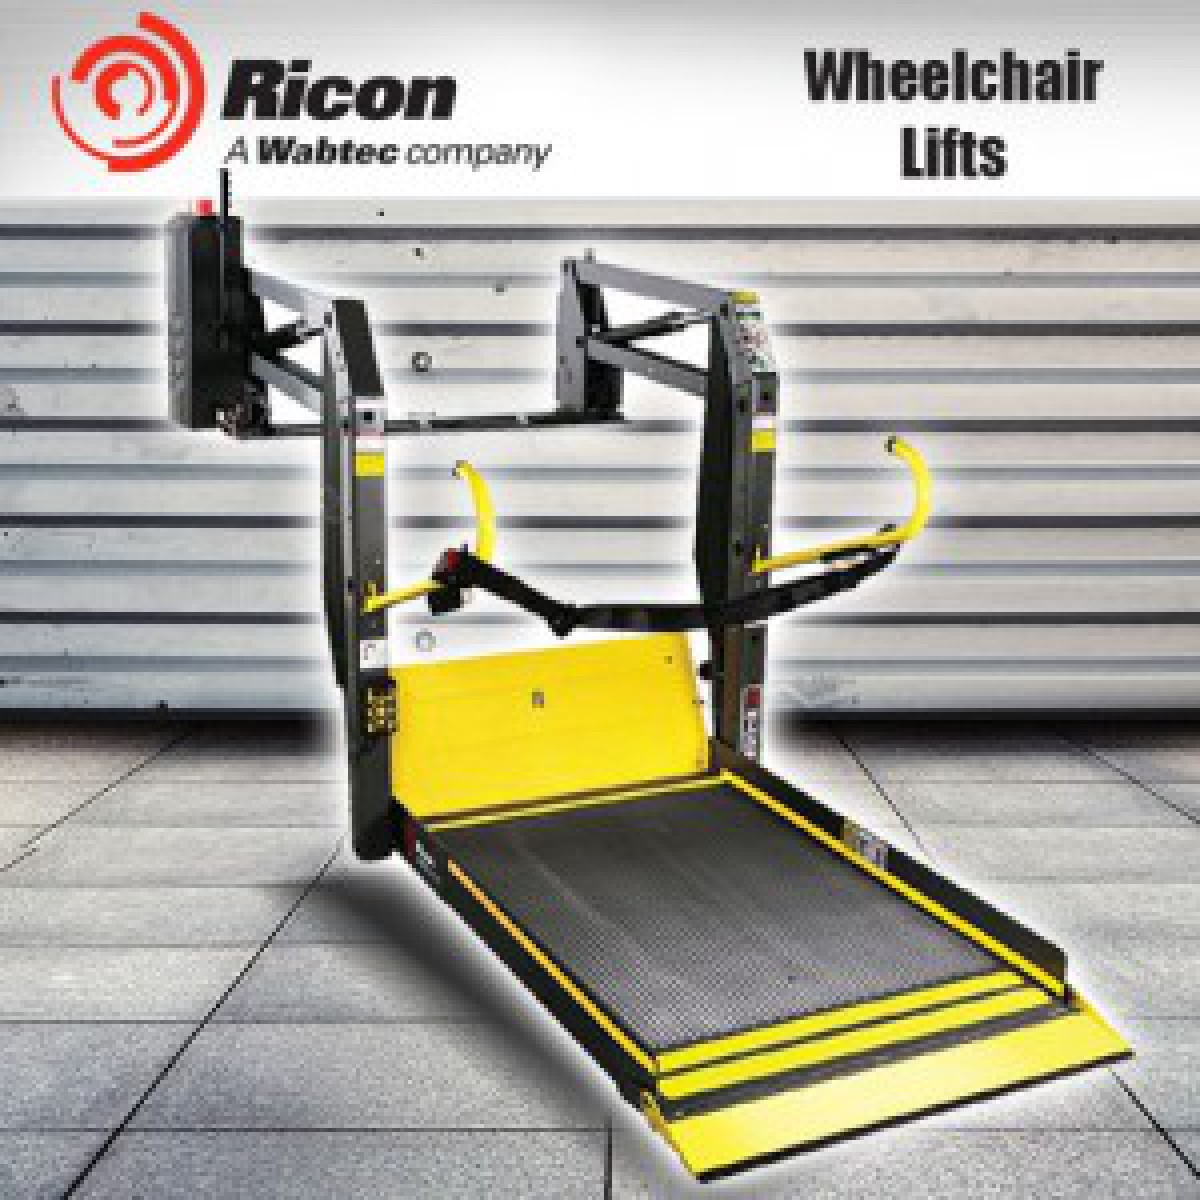 Braun Millenium Series Wheelchair Lift - Find The Perfect Platform Lift